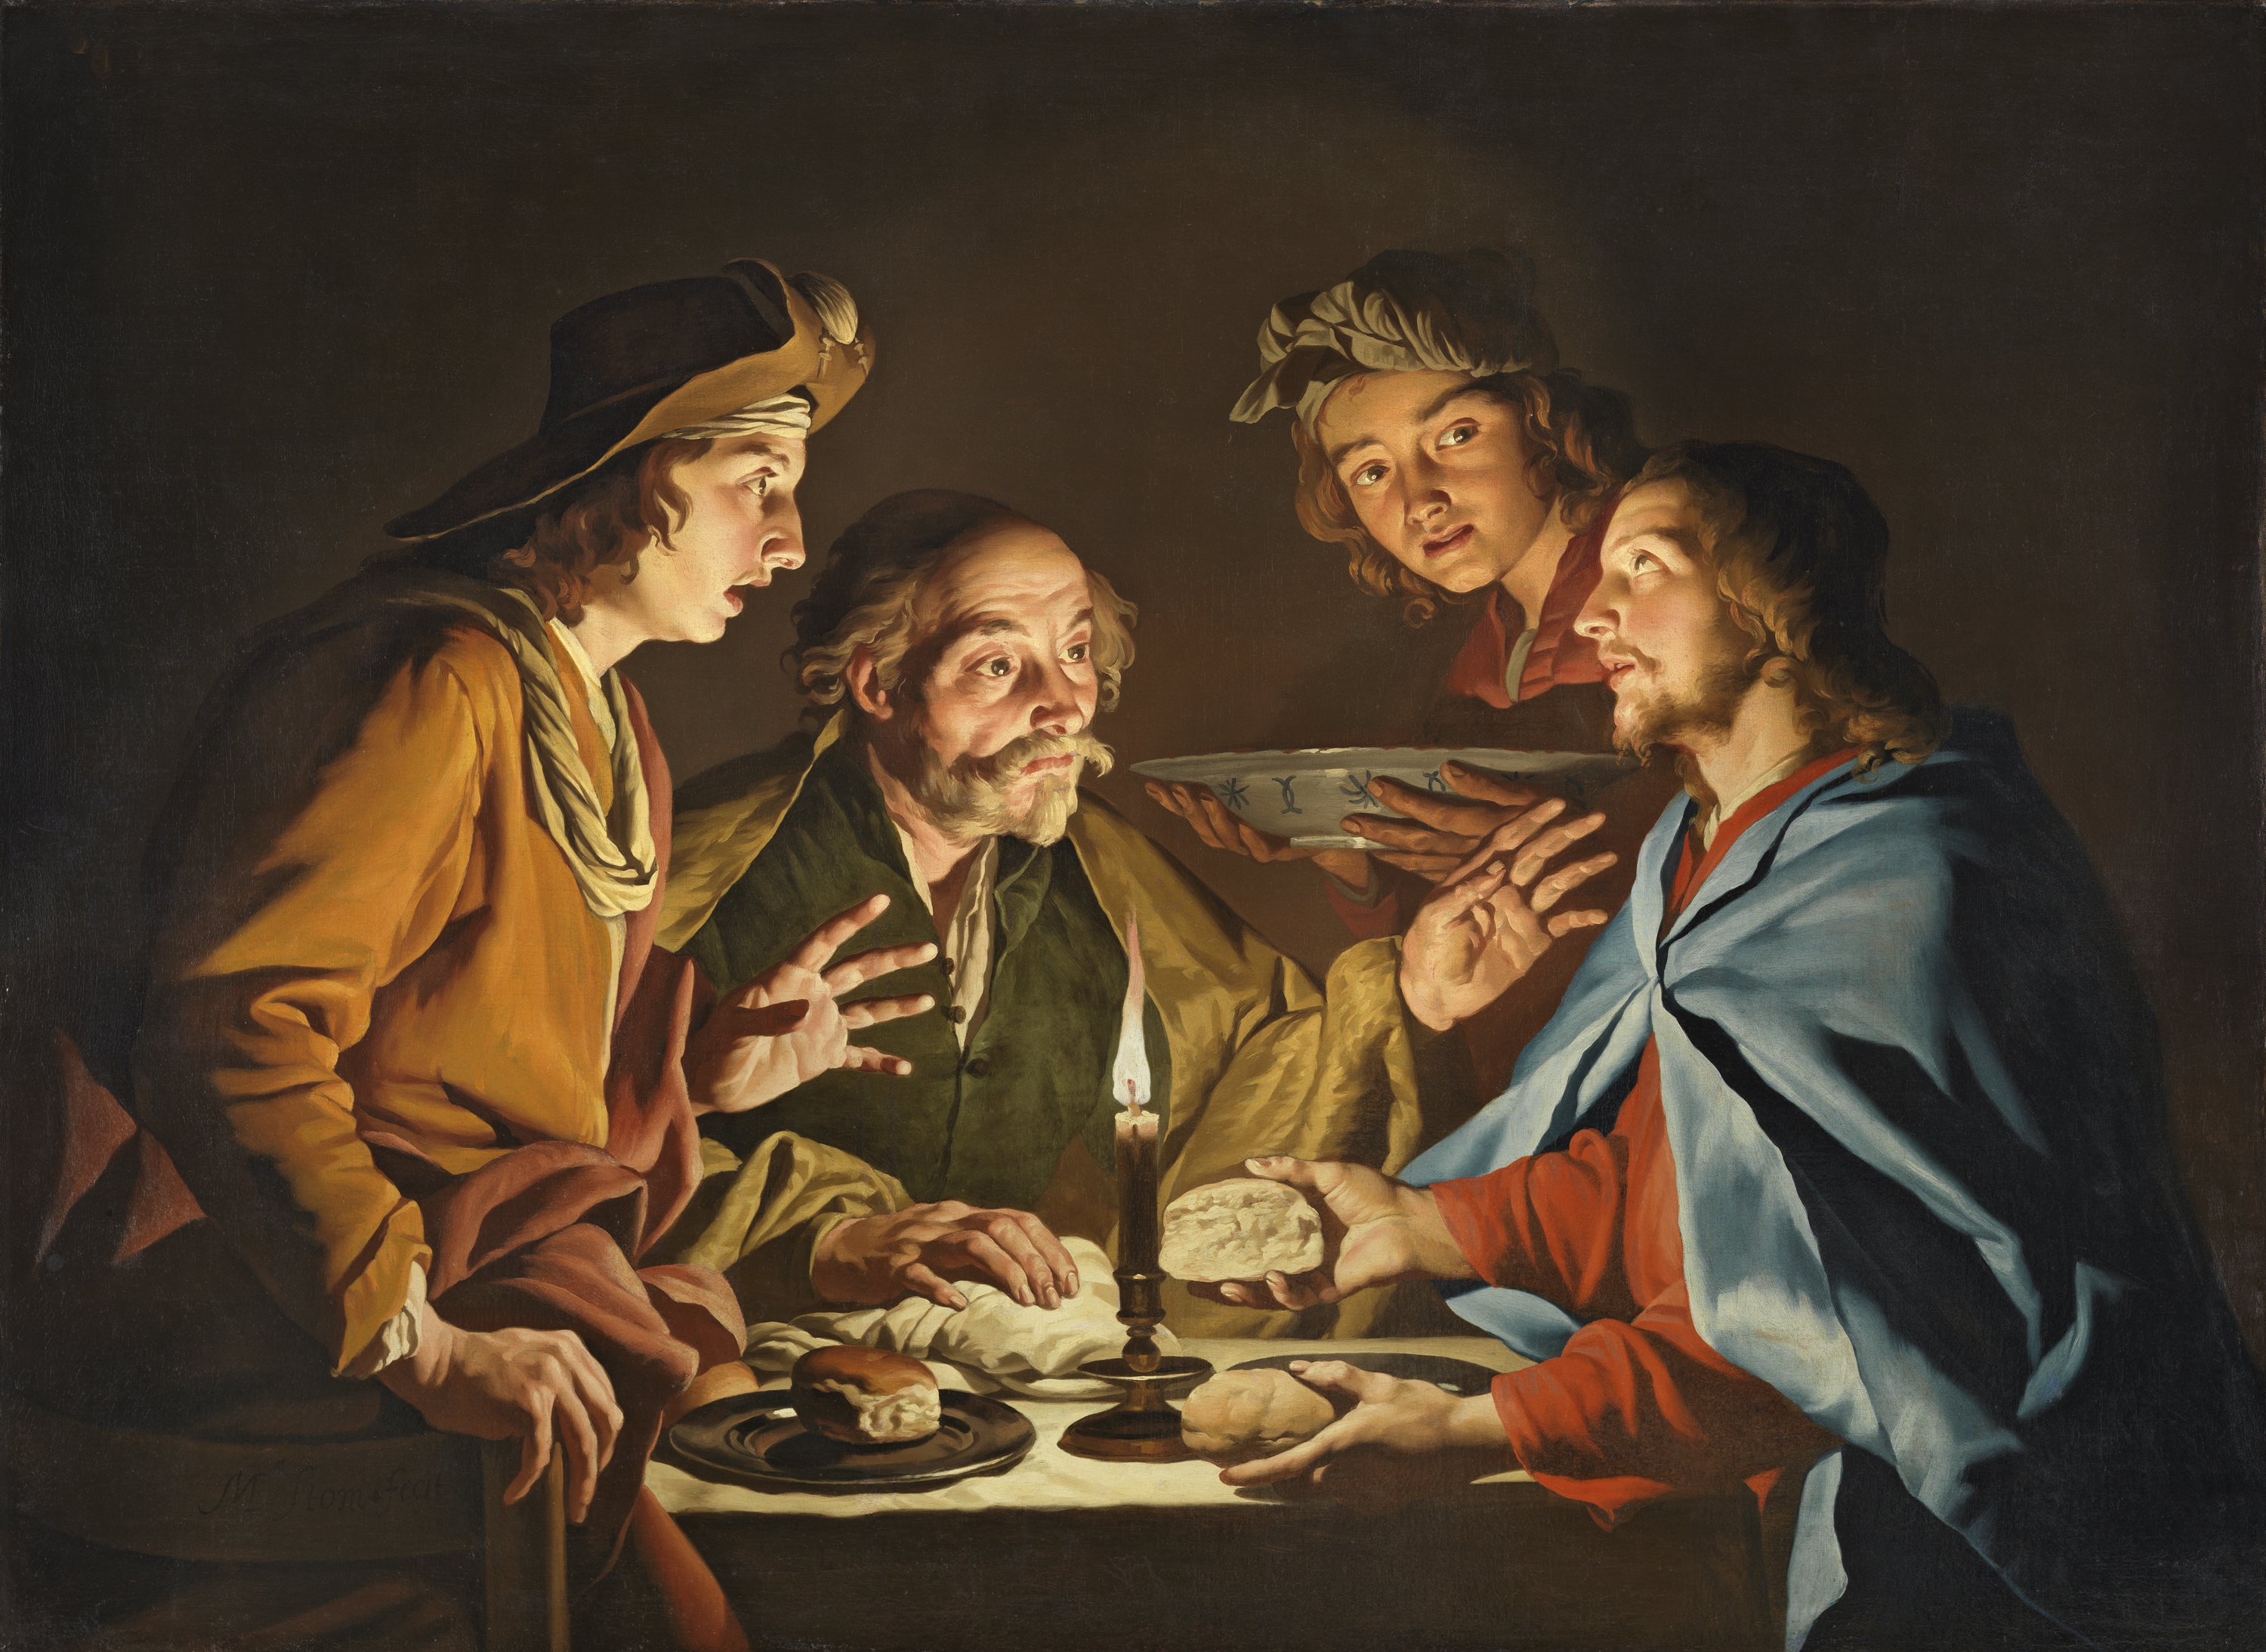 The Supper at Emmaus. La Cena de Emaús, c. 1633-1639